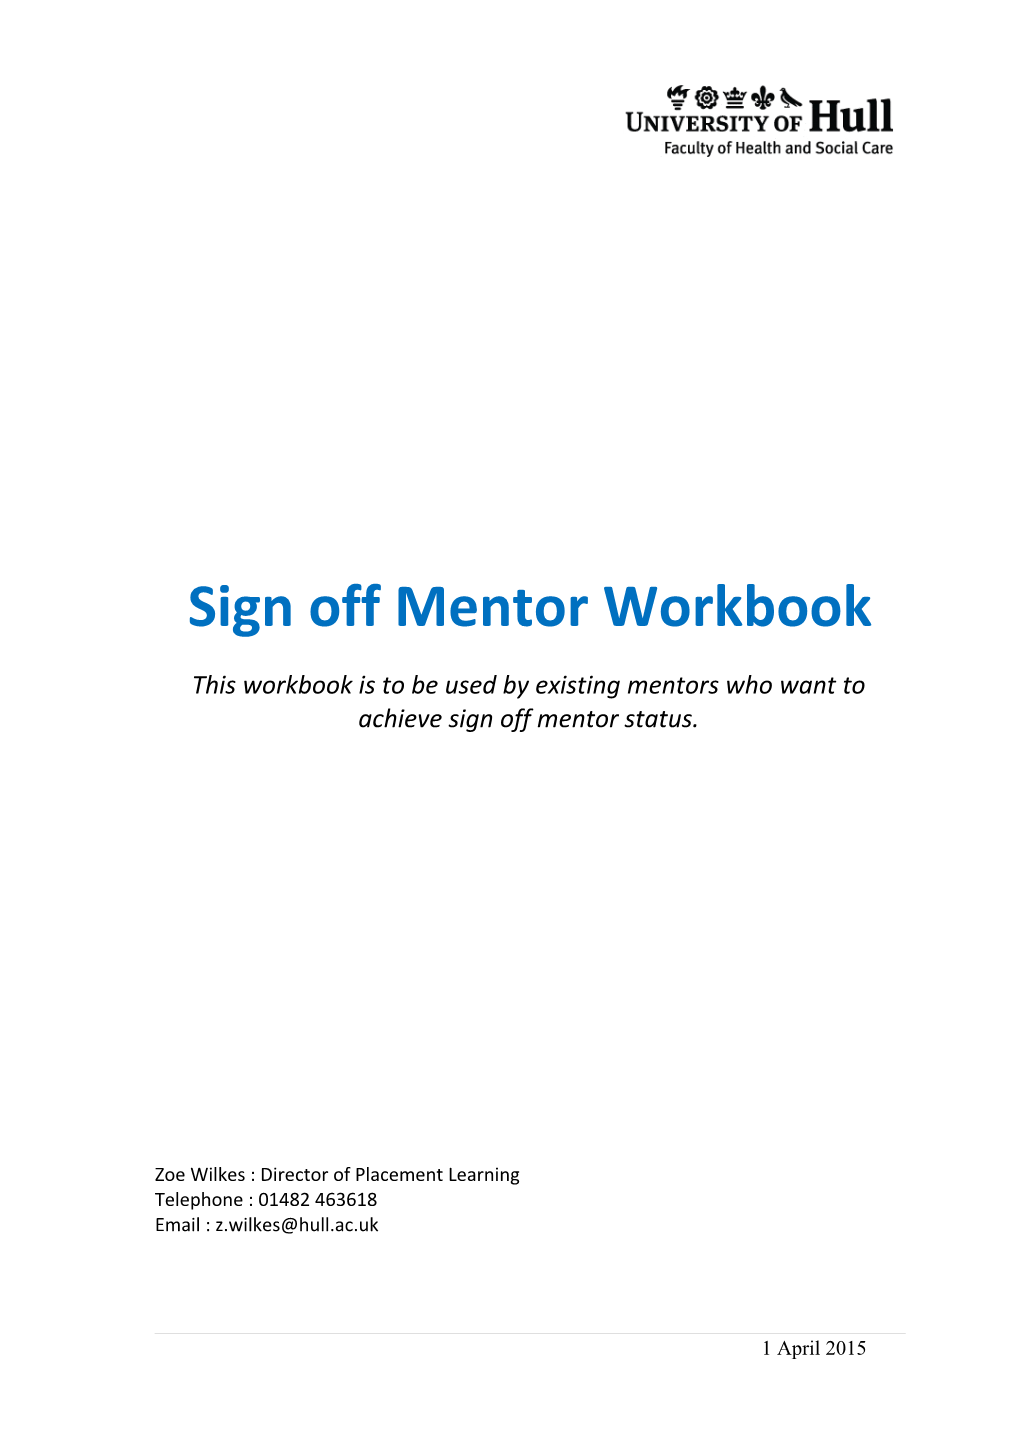 Sign-Off Workbook